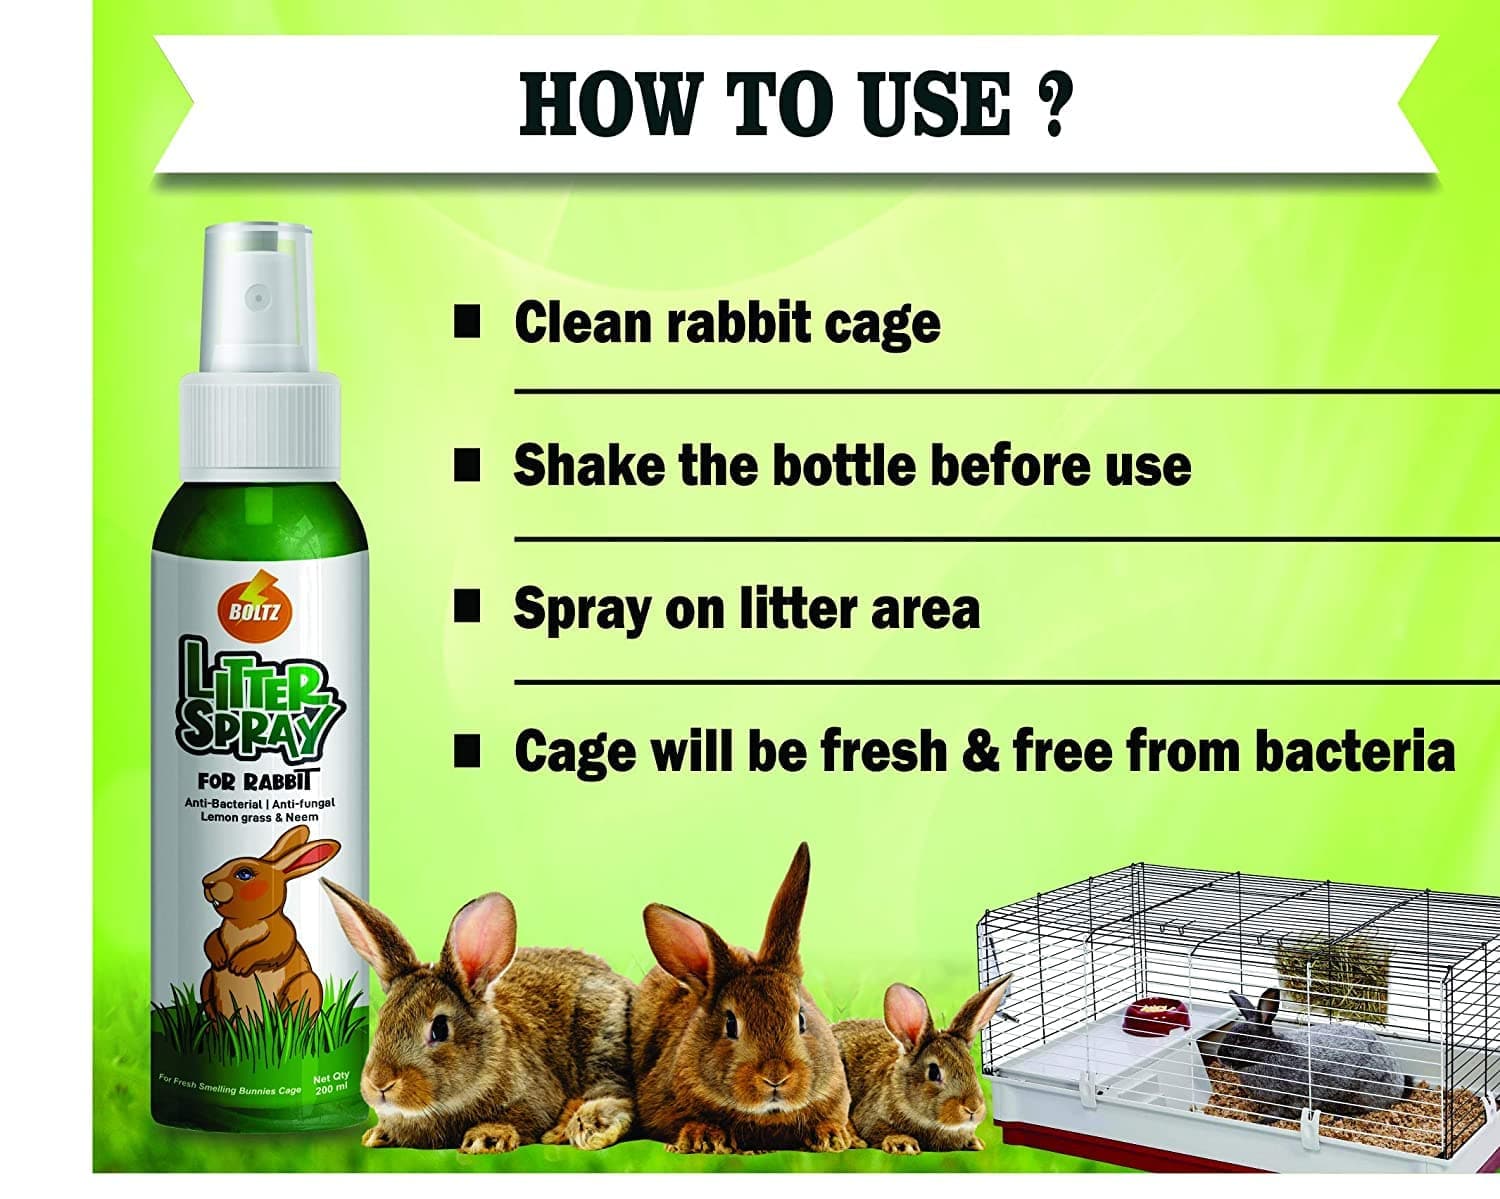 Boltz Antibacterial Litter Spray for Rabbit